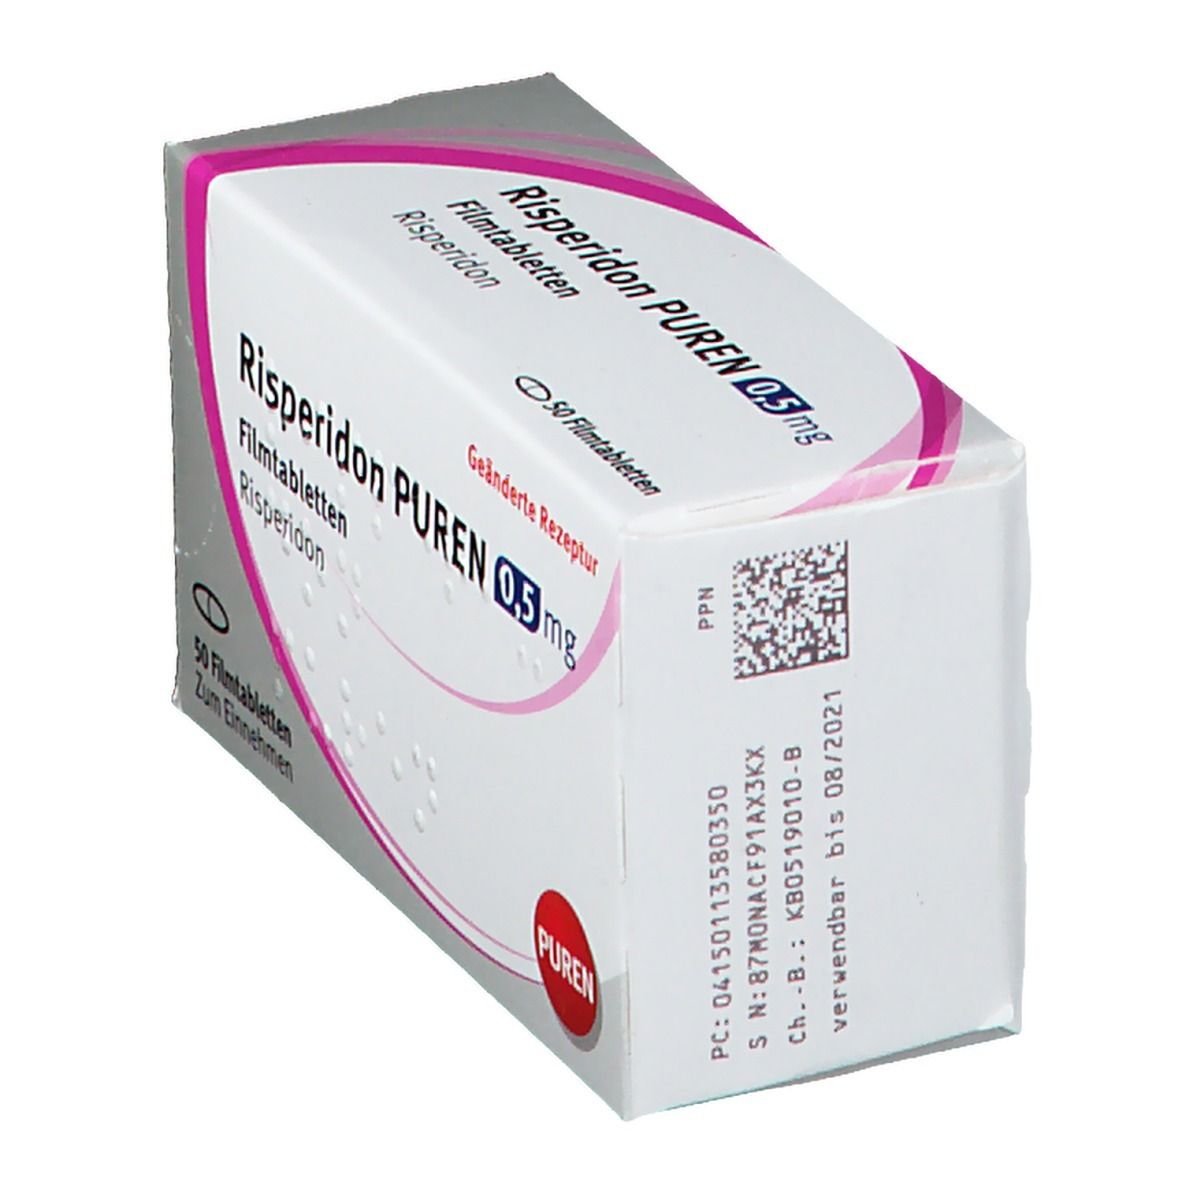 Risperidon PUREN 0,5 mg